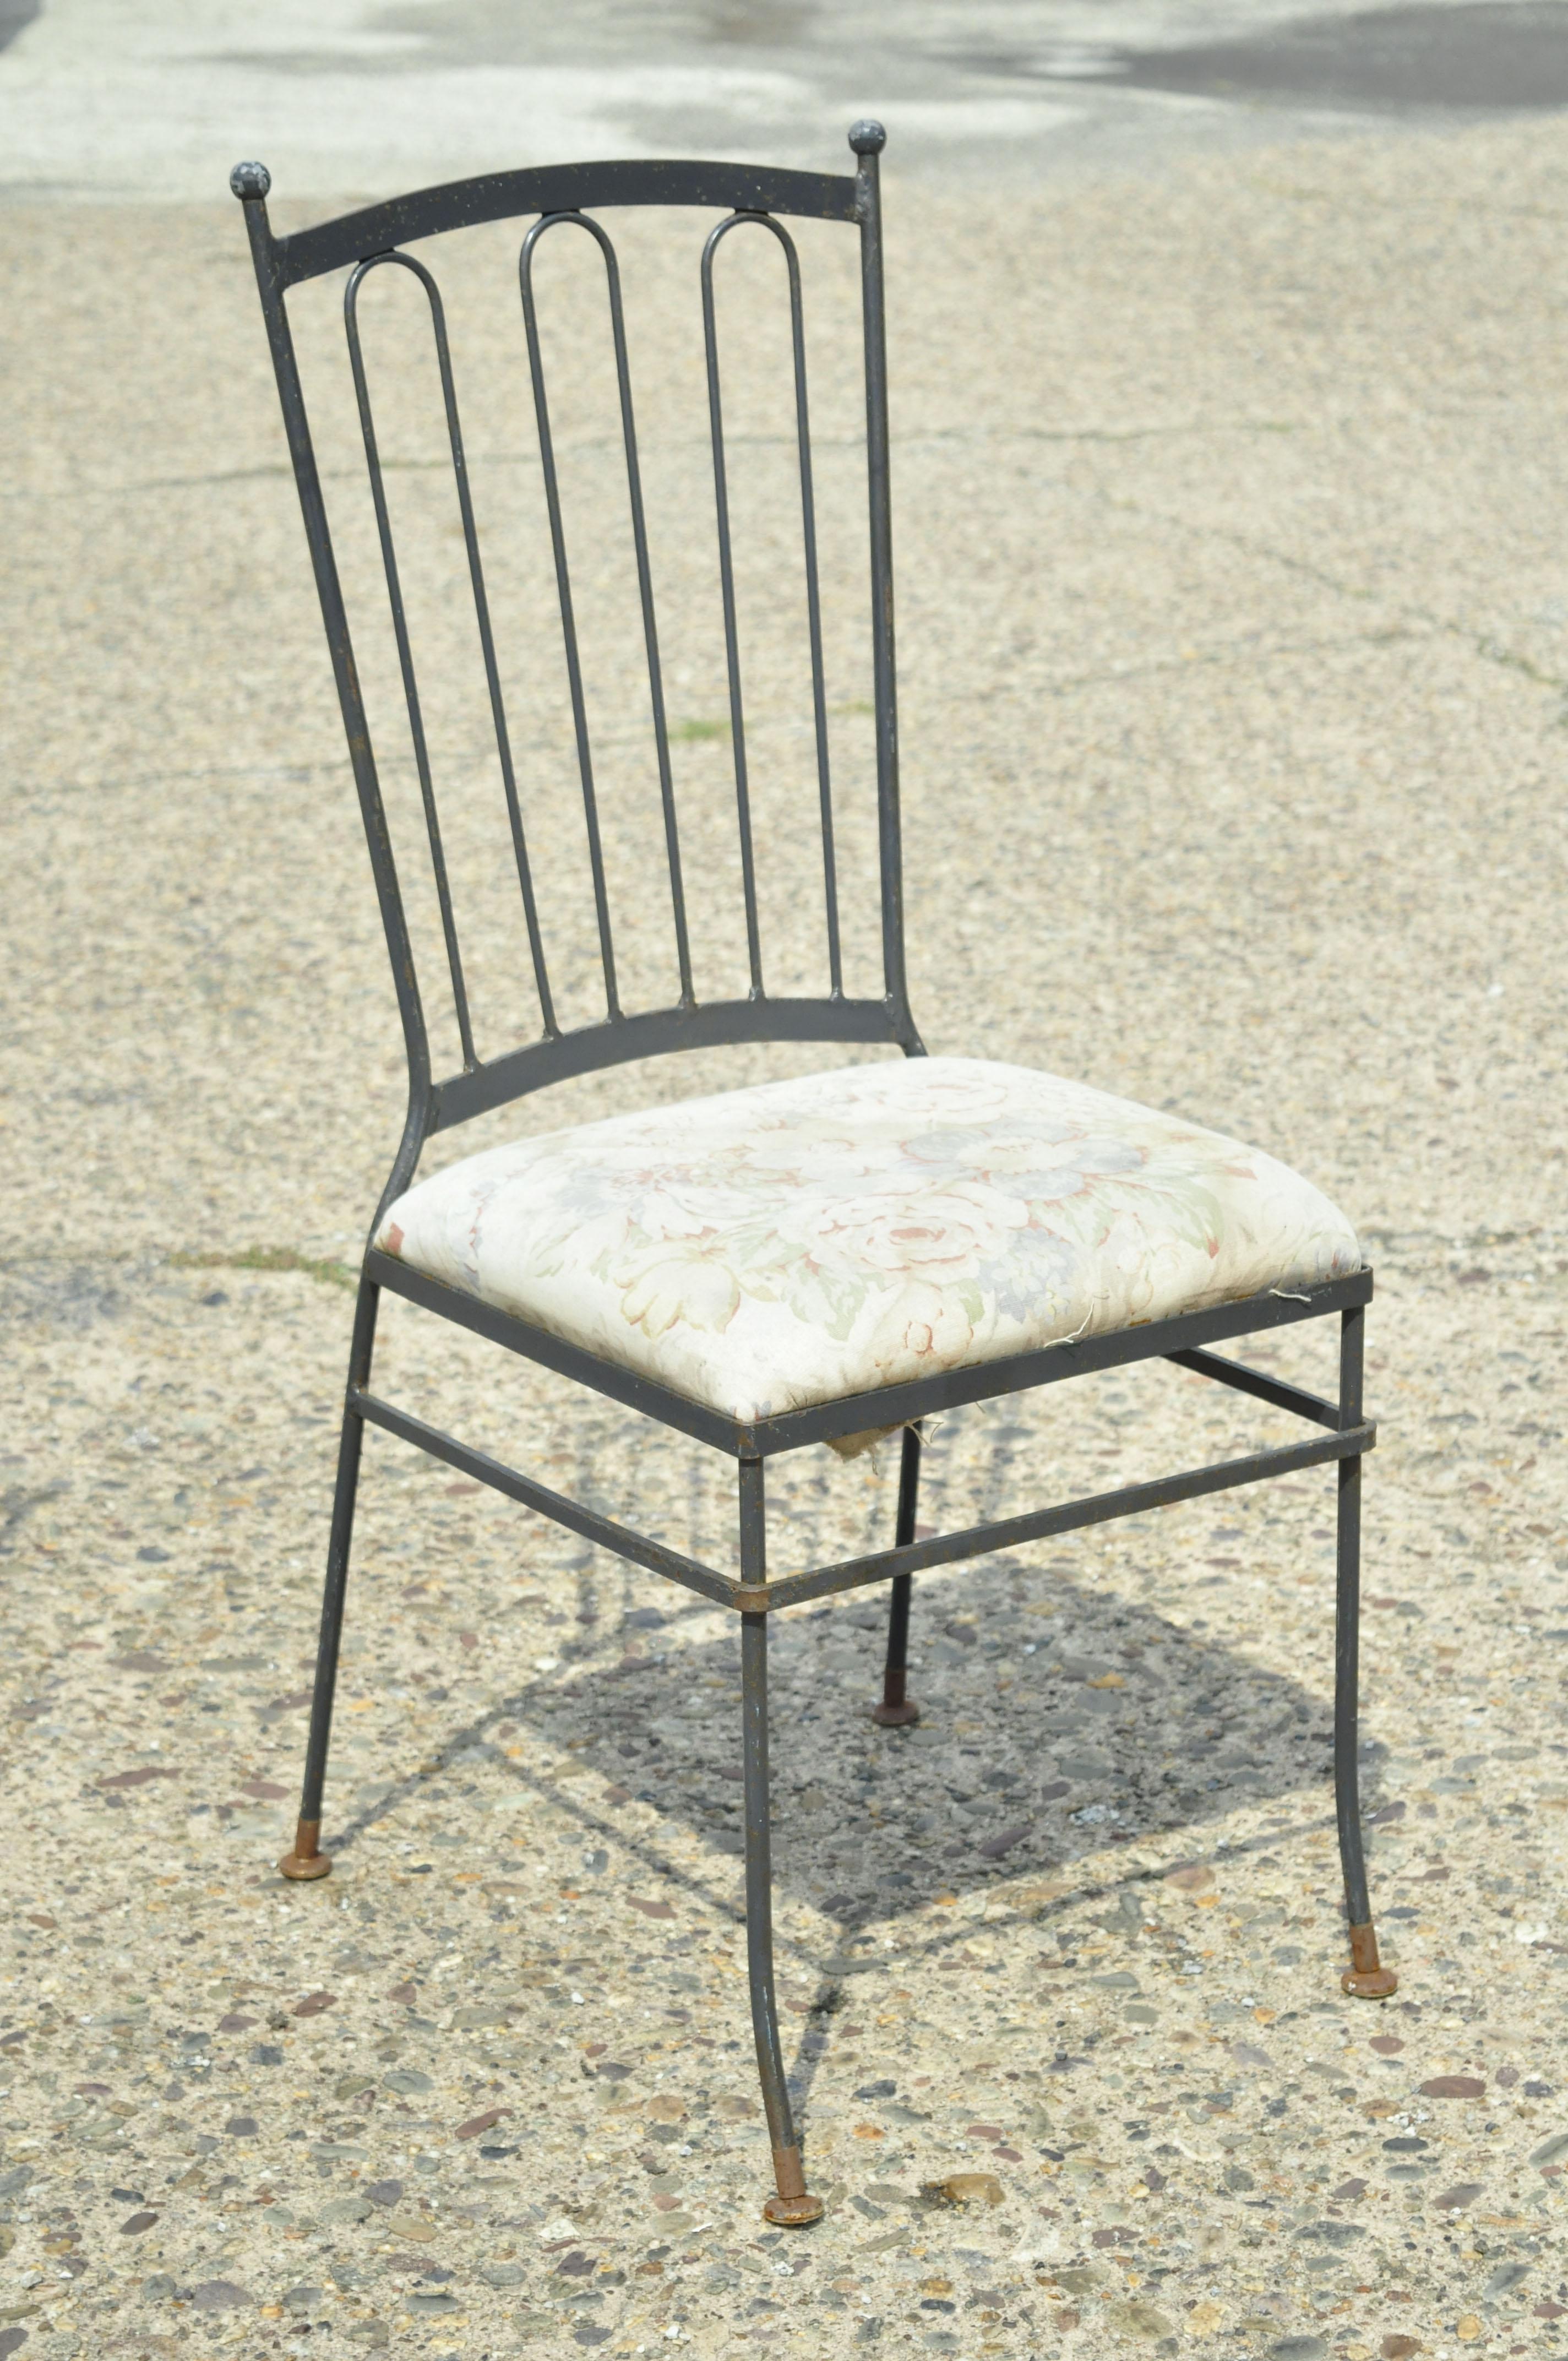 Vintage Mid Century Italian Modern Wrought Iron Patio Dining Chairs - Set of 4 6